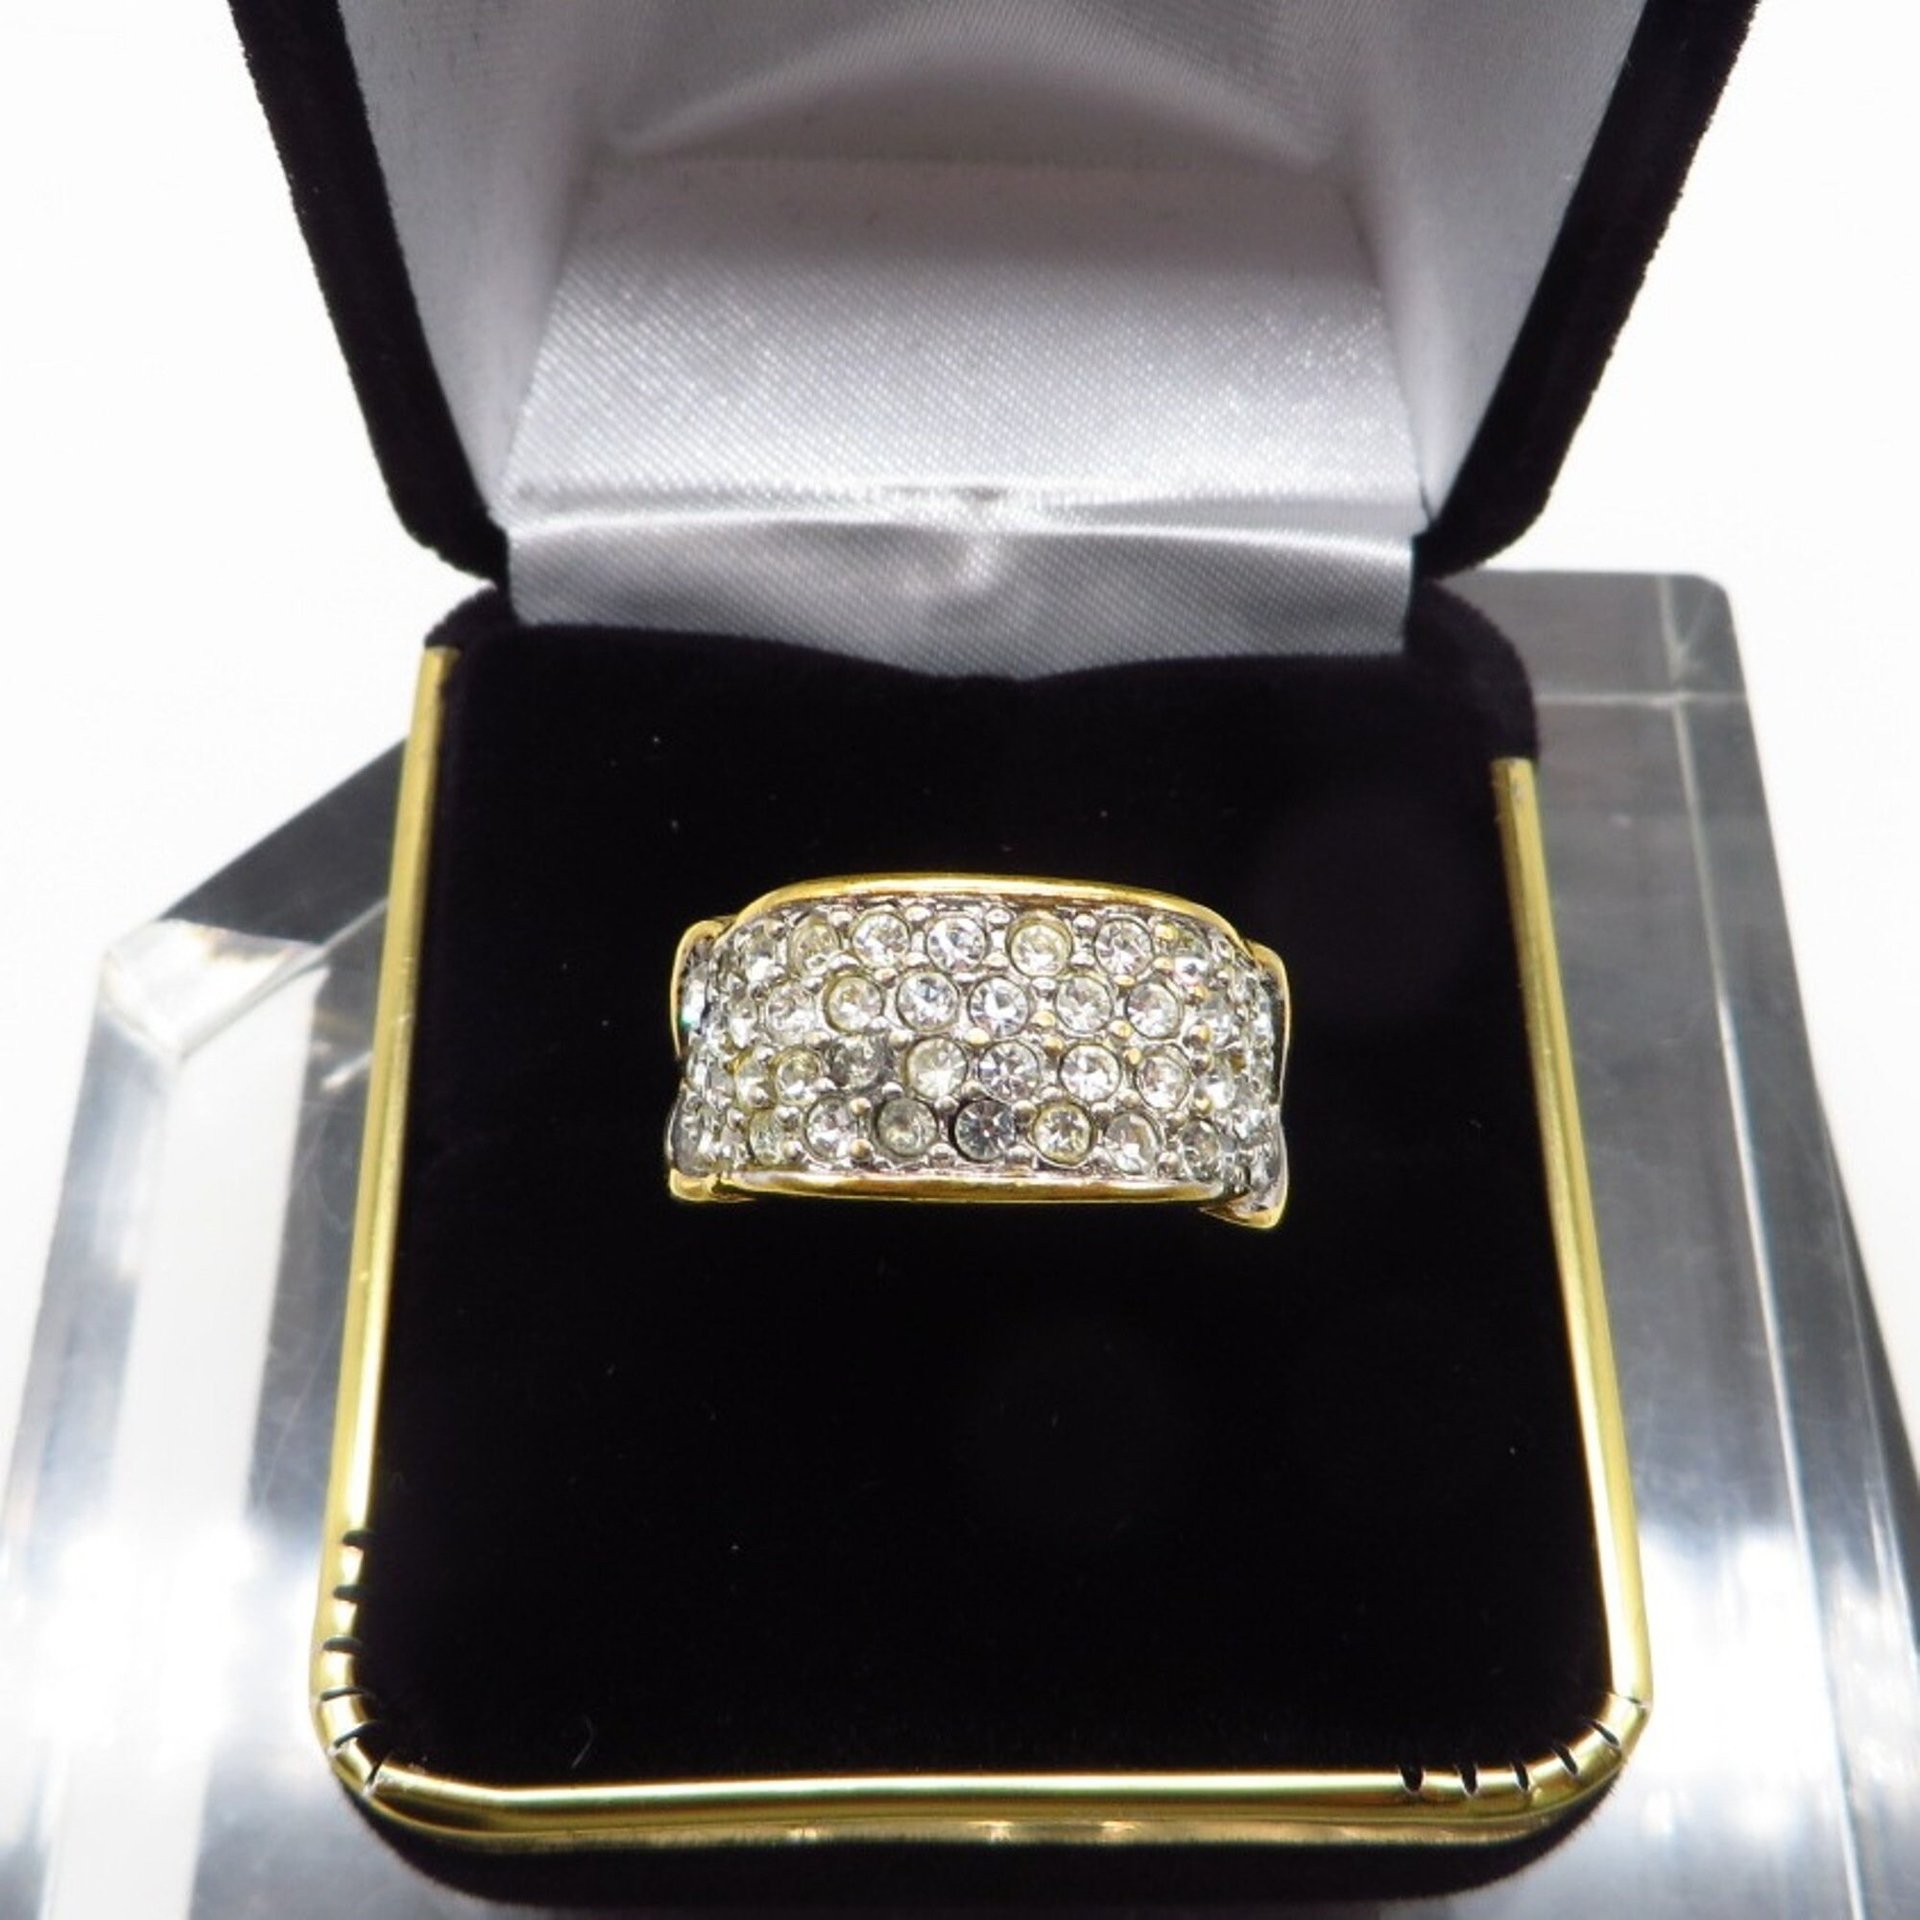 Elizabeth Taylor "Brilliance" Ring, 22K Gold Overlay Pave Rhinestone Ring, Size 6.5